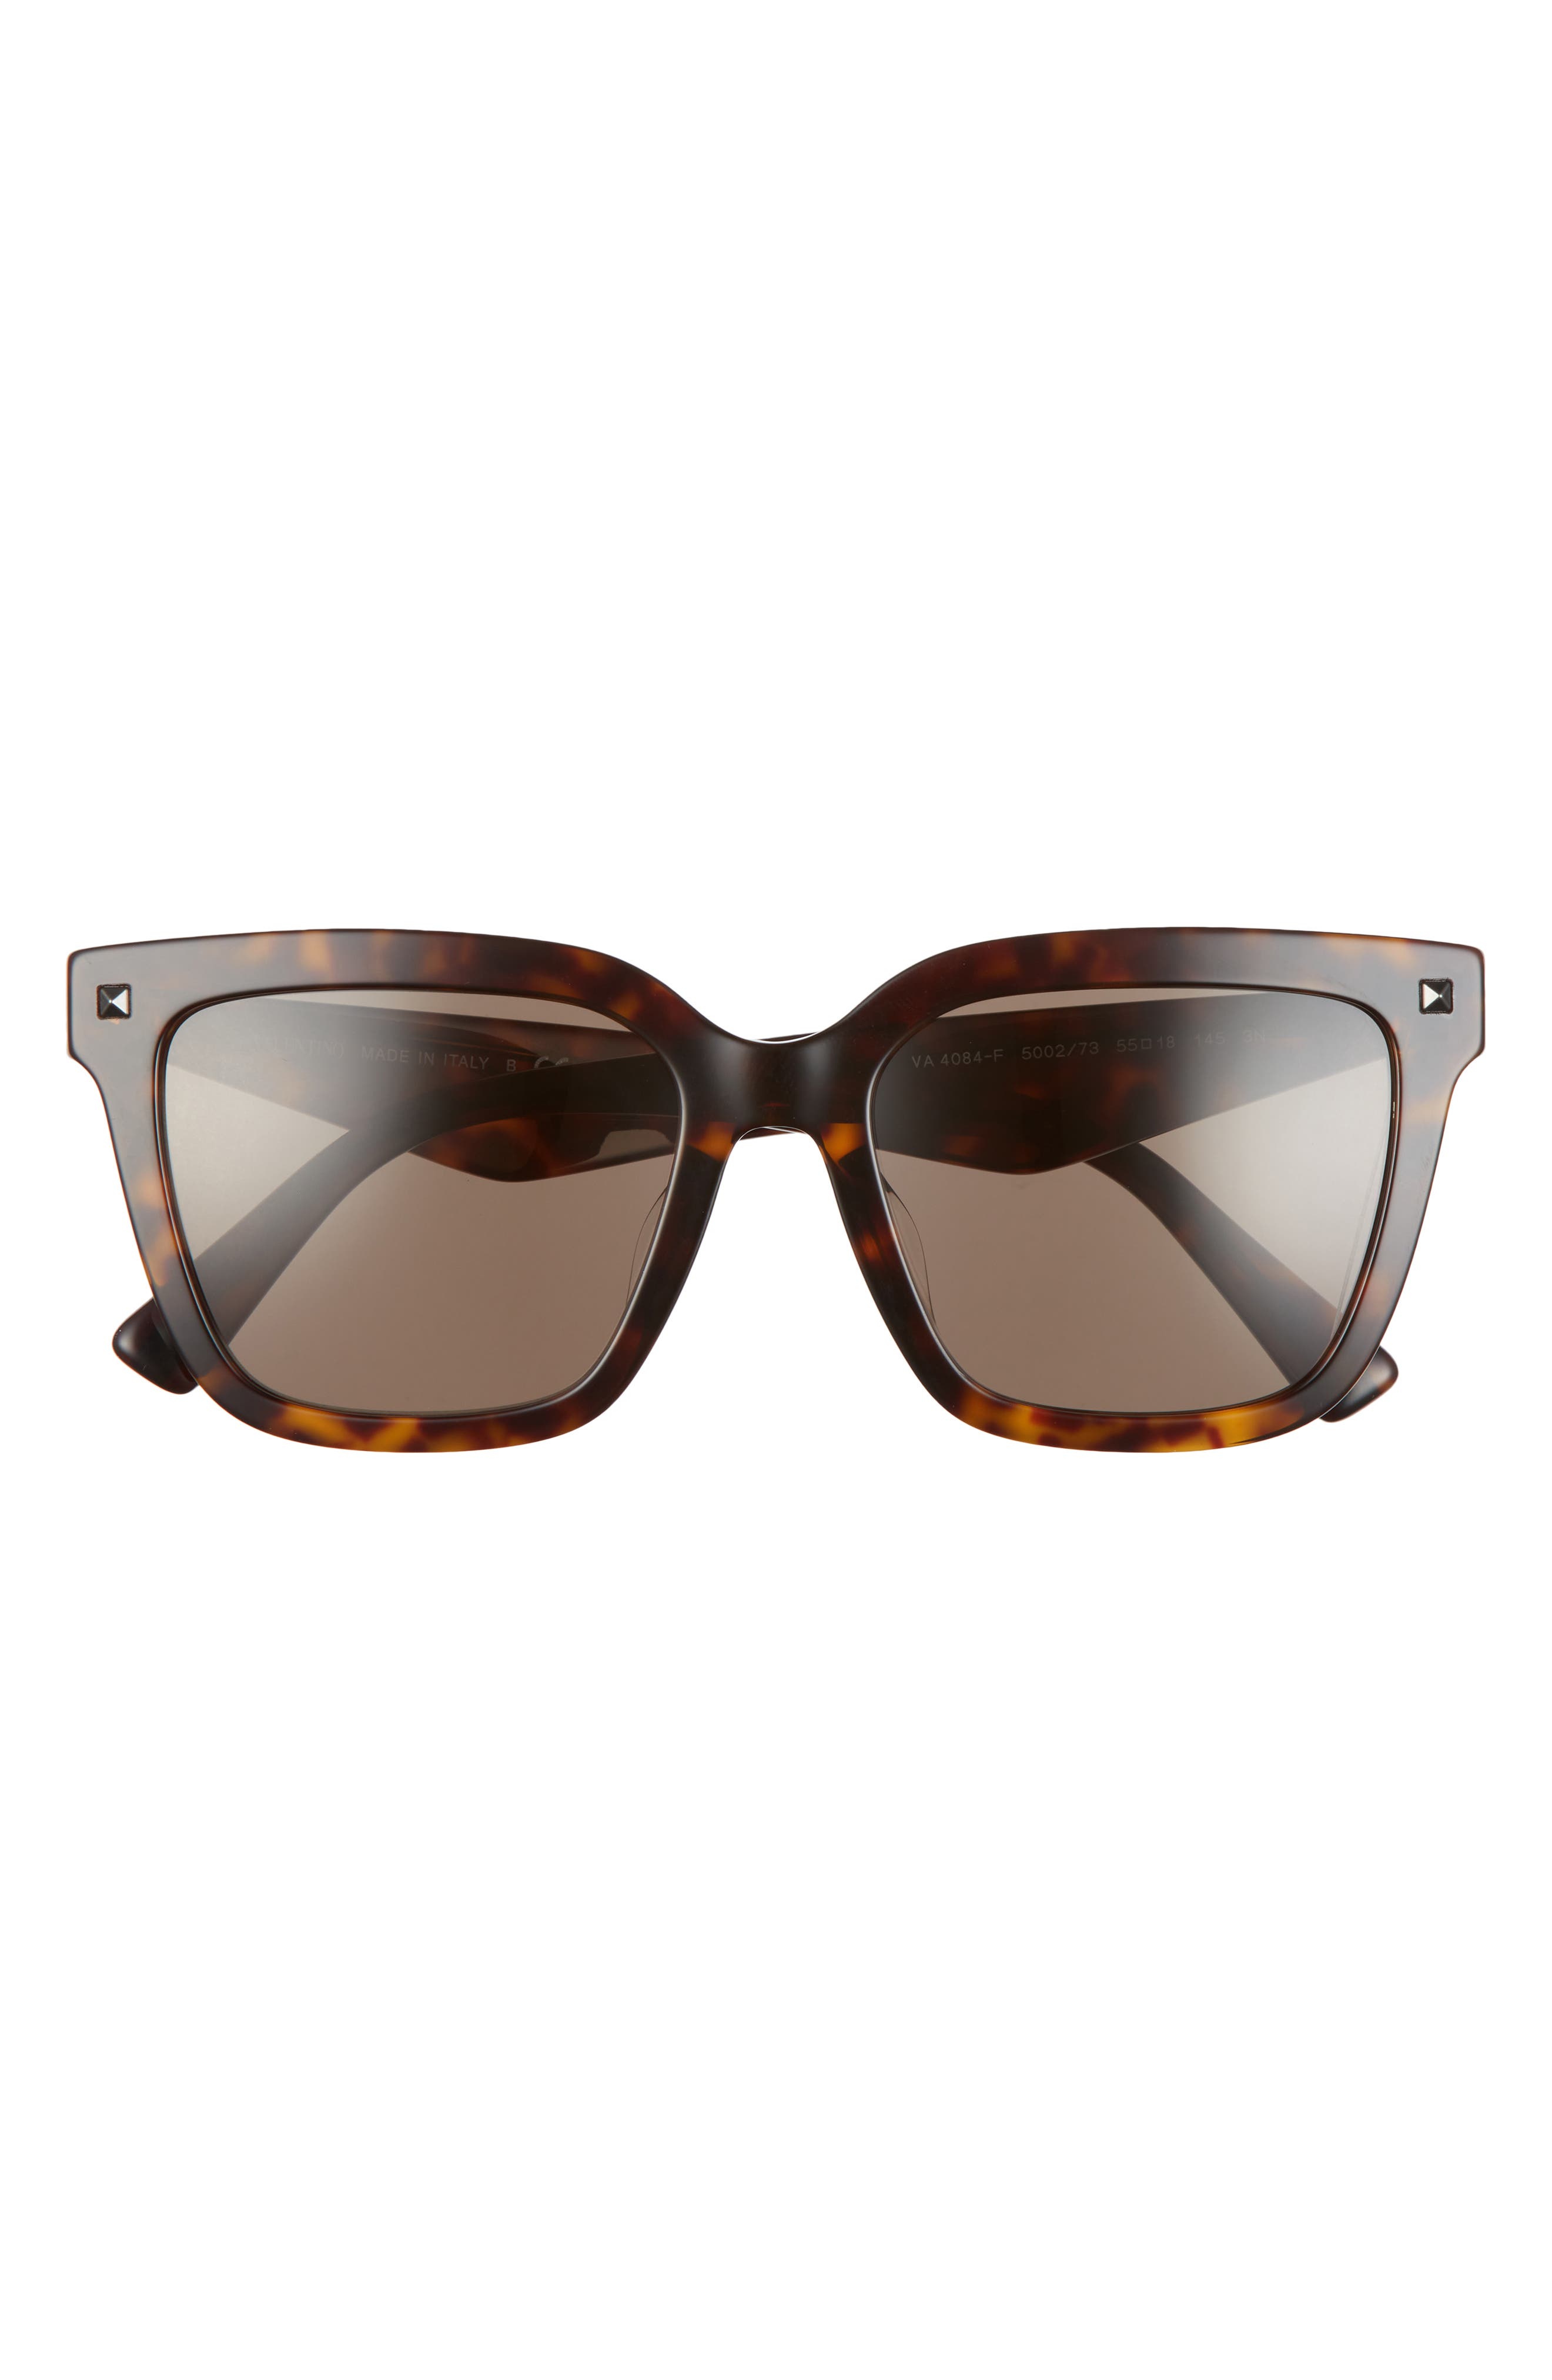 Valentino 55mm Square Sunglasses in Havana/Brown at Nordstrom